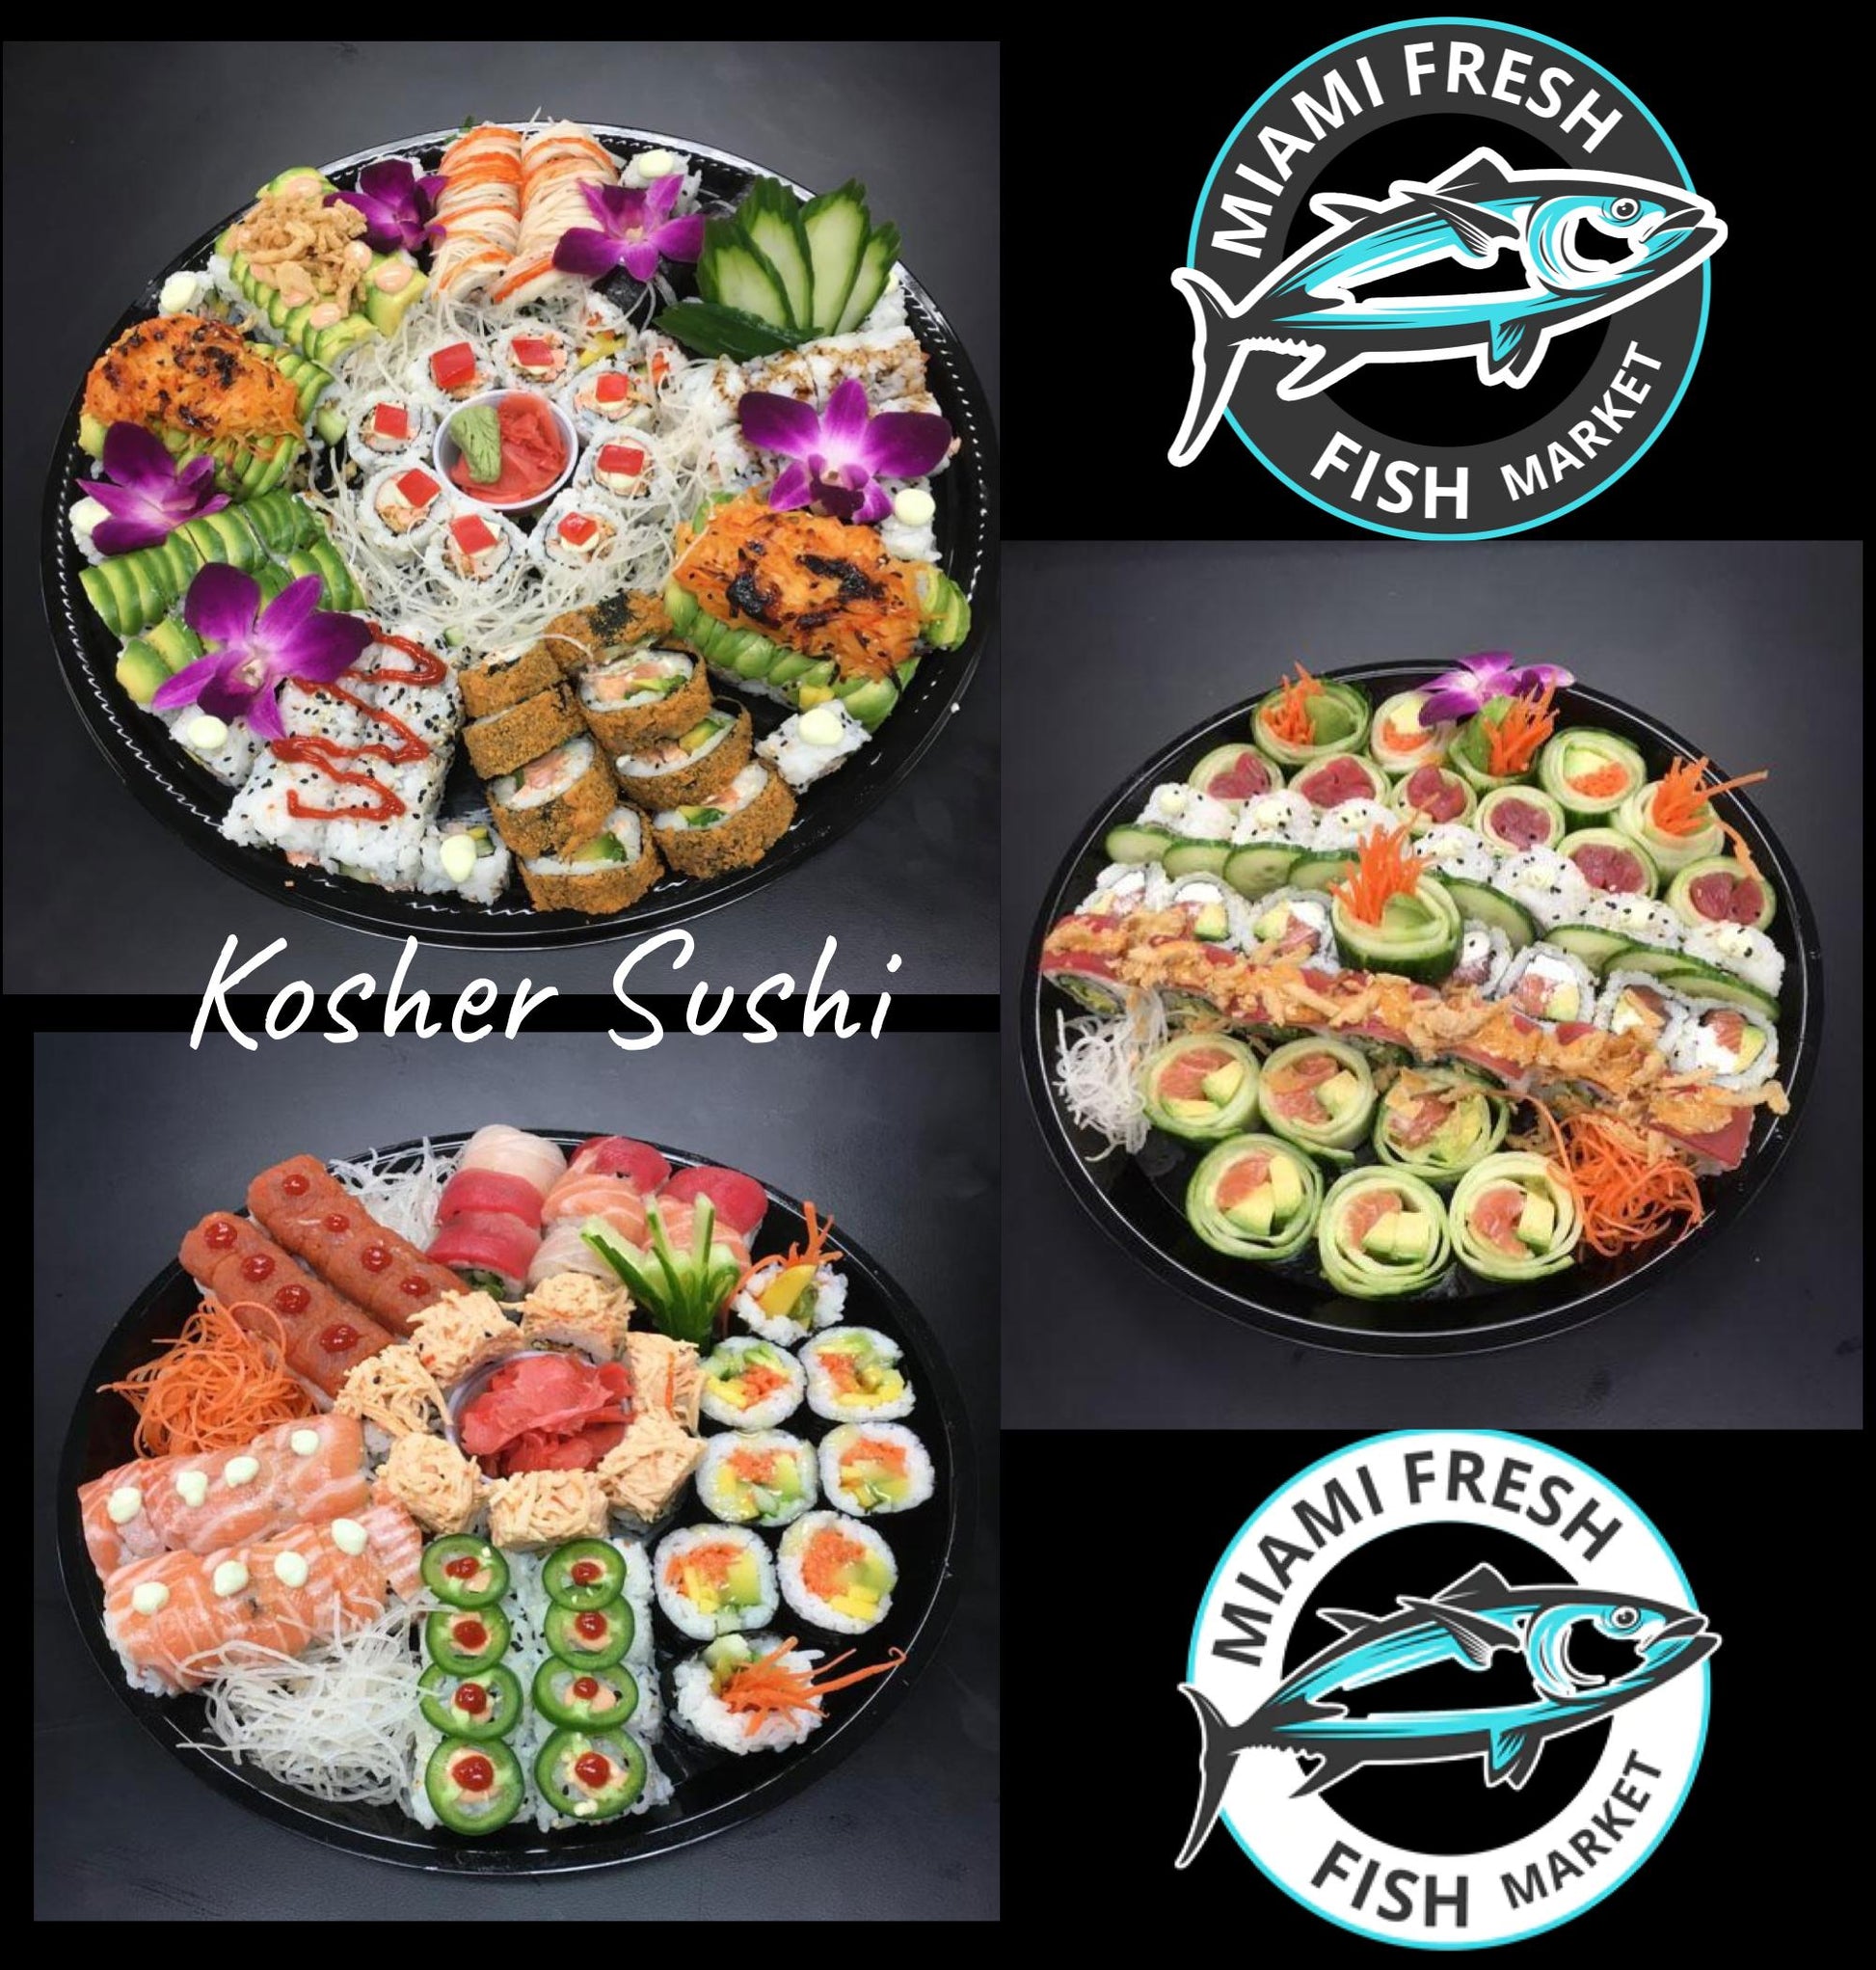 Kosher-sushi-platters-miami-fresh-fish-market-in-miami-beach